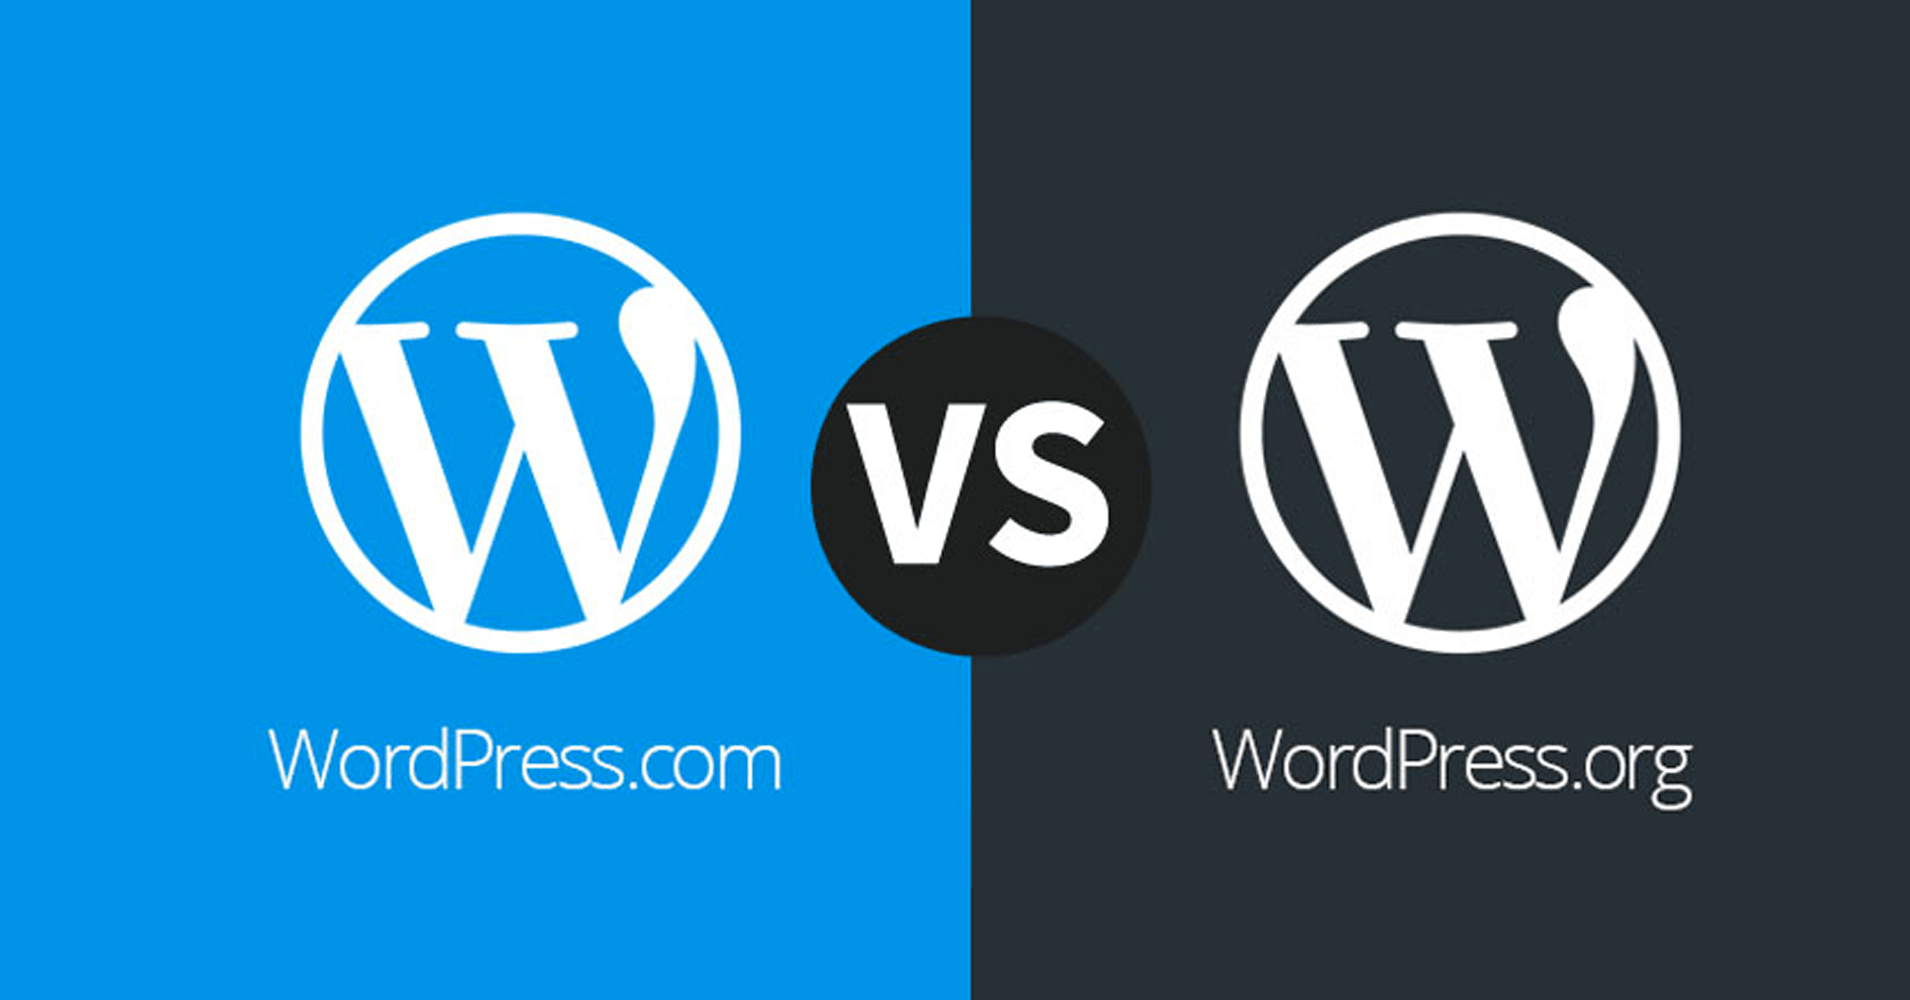 WordPress.com vs WordPress.org | A Head to Head Comparison Between the two Platforms